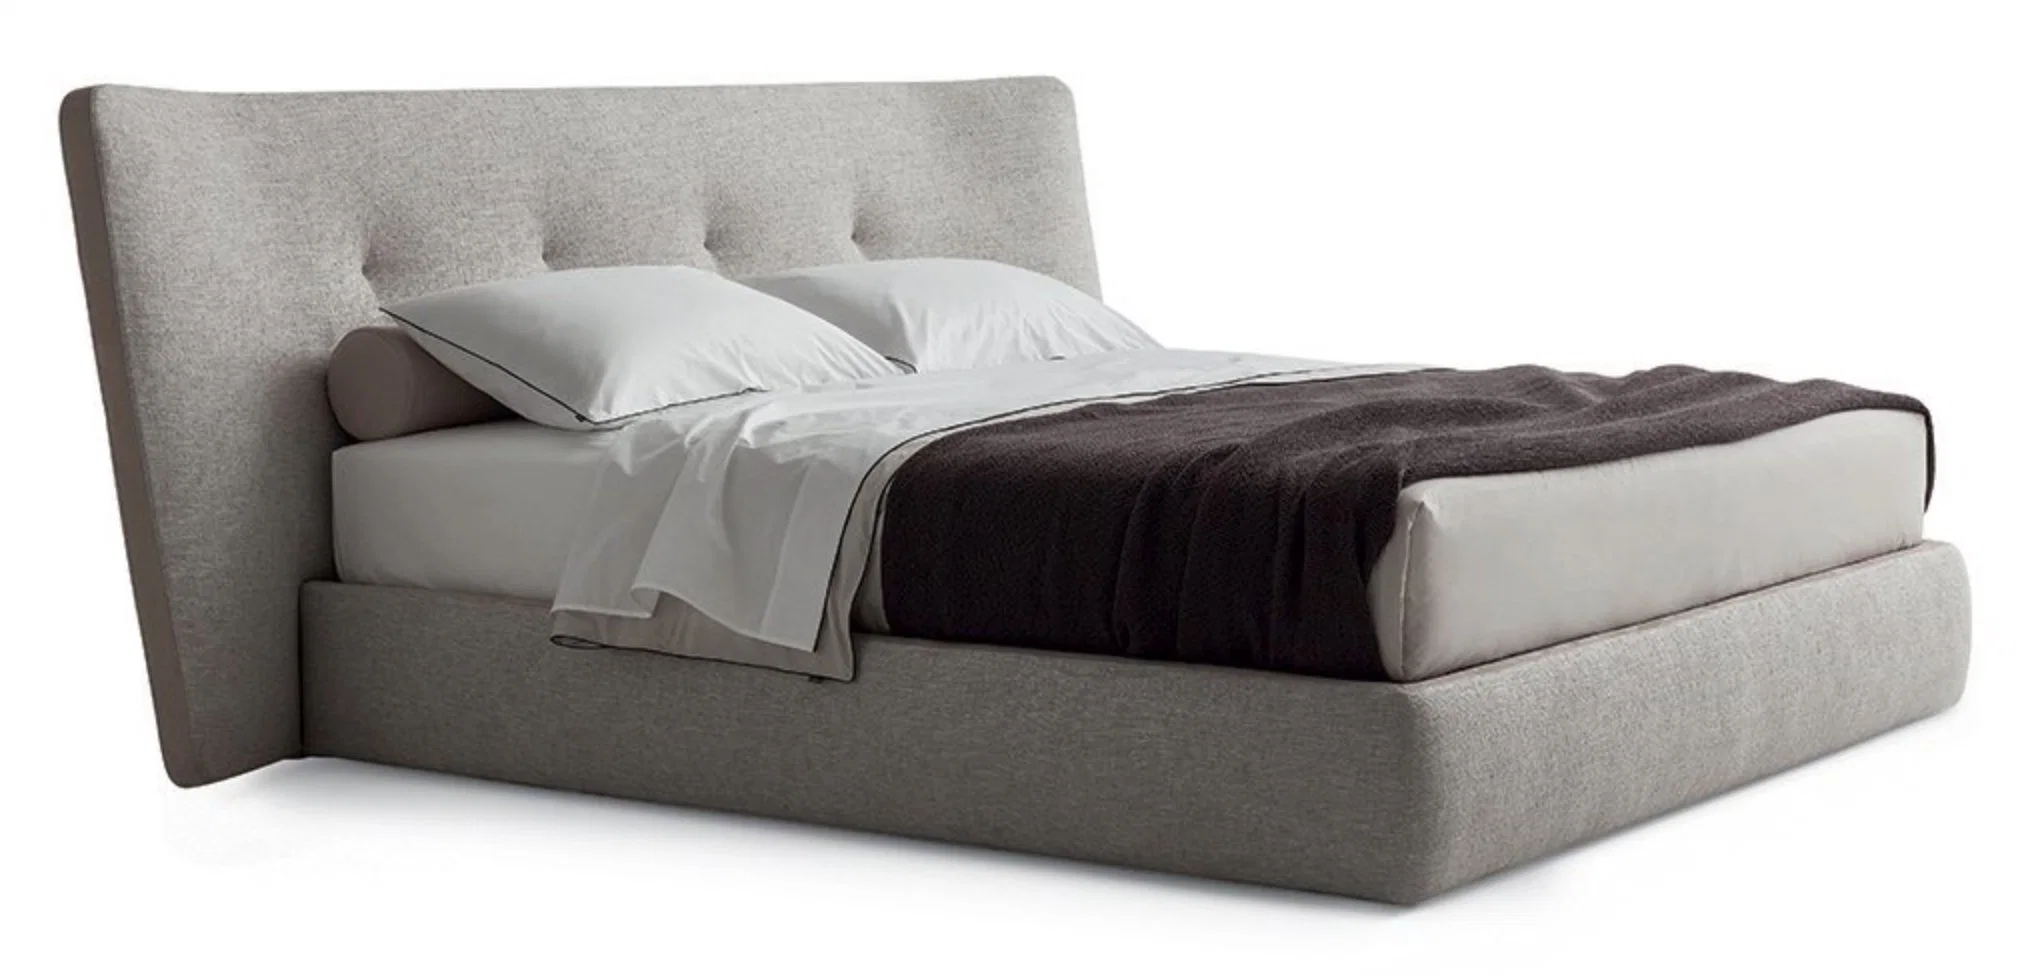 Confort Mobiliario de dormitorio moderno Camas cama doble moderno tejido suave Cama tamaño queen